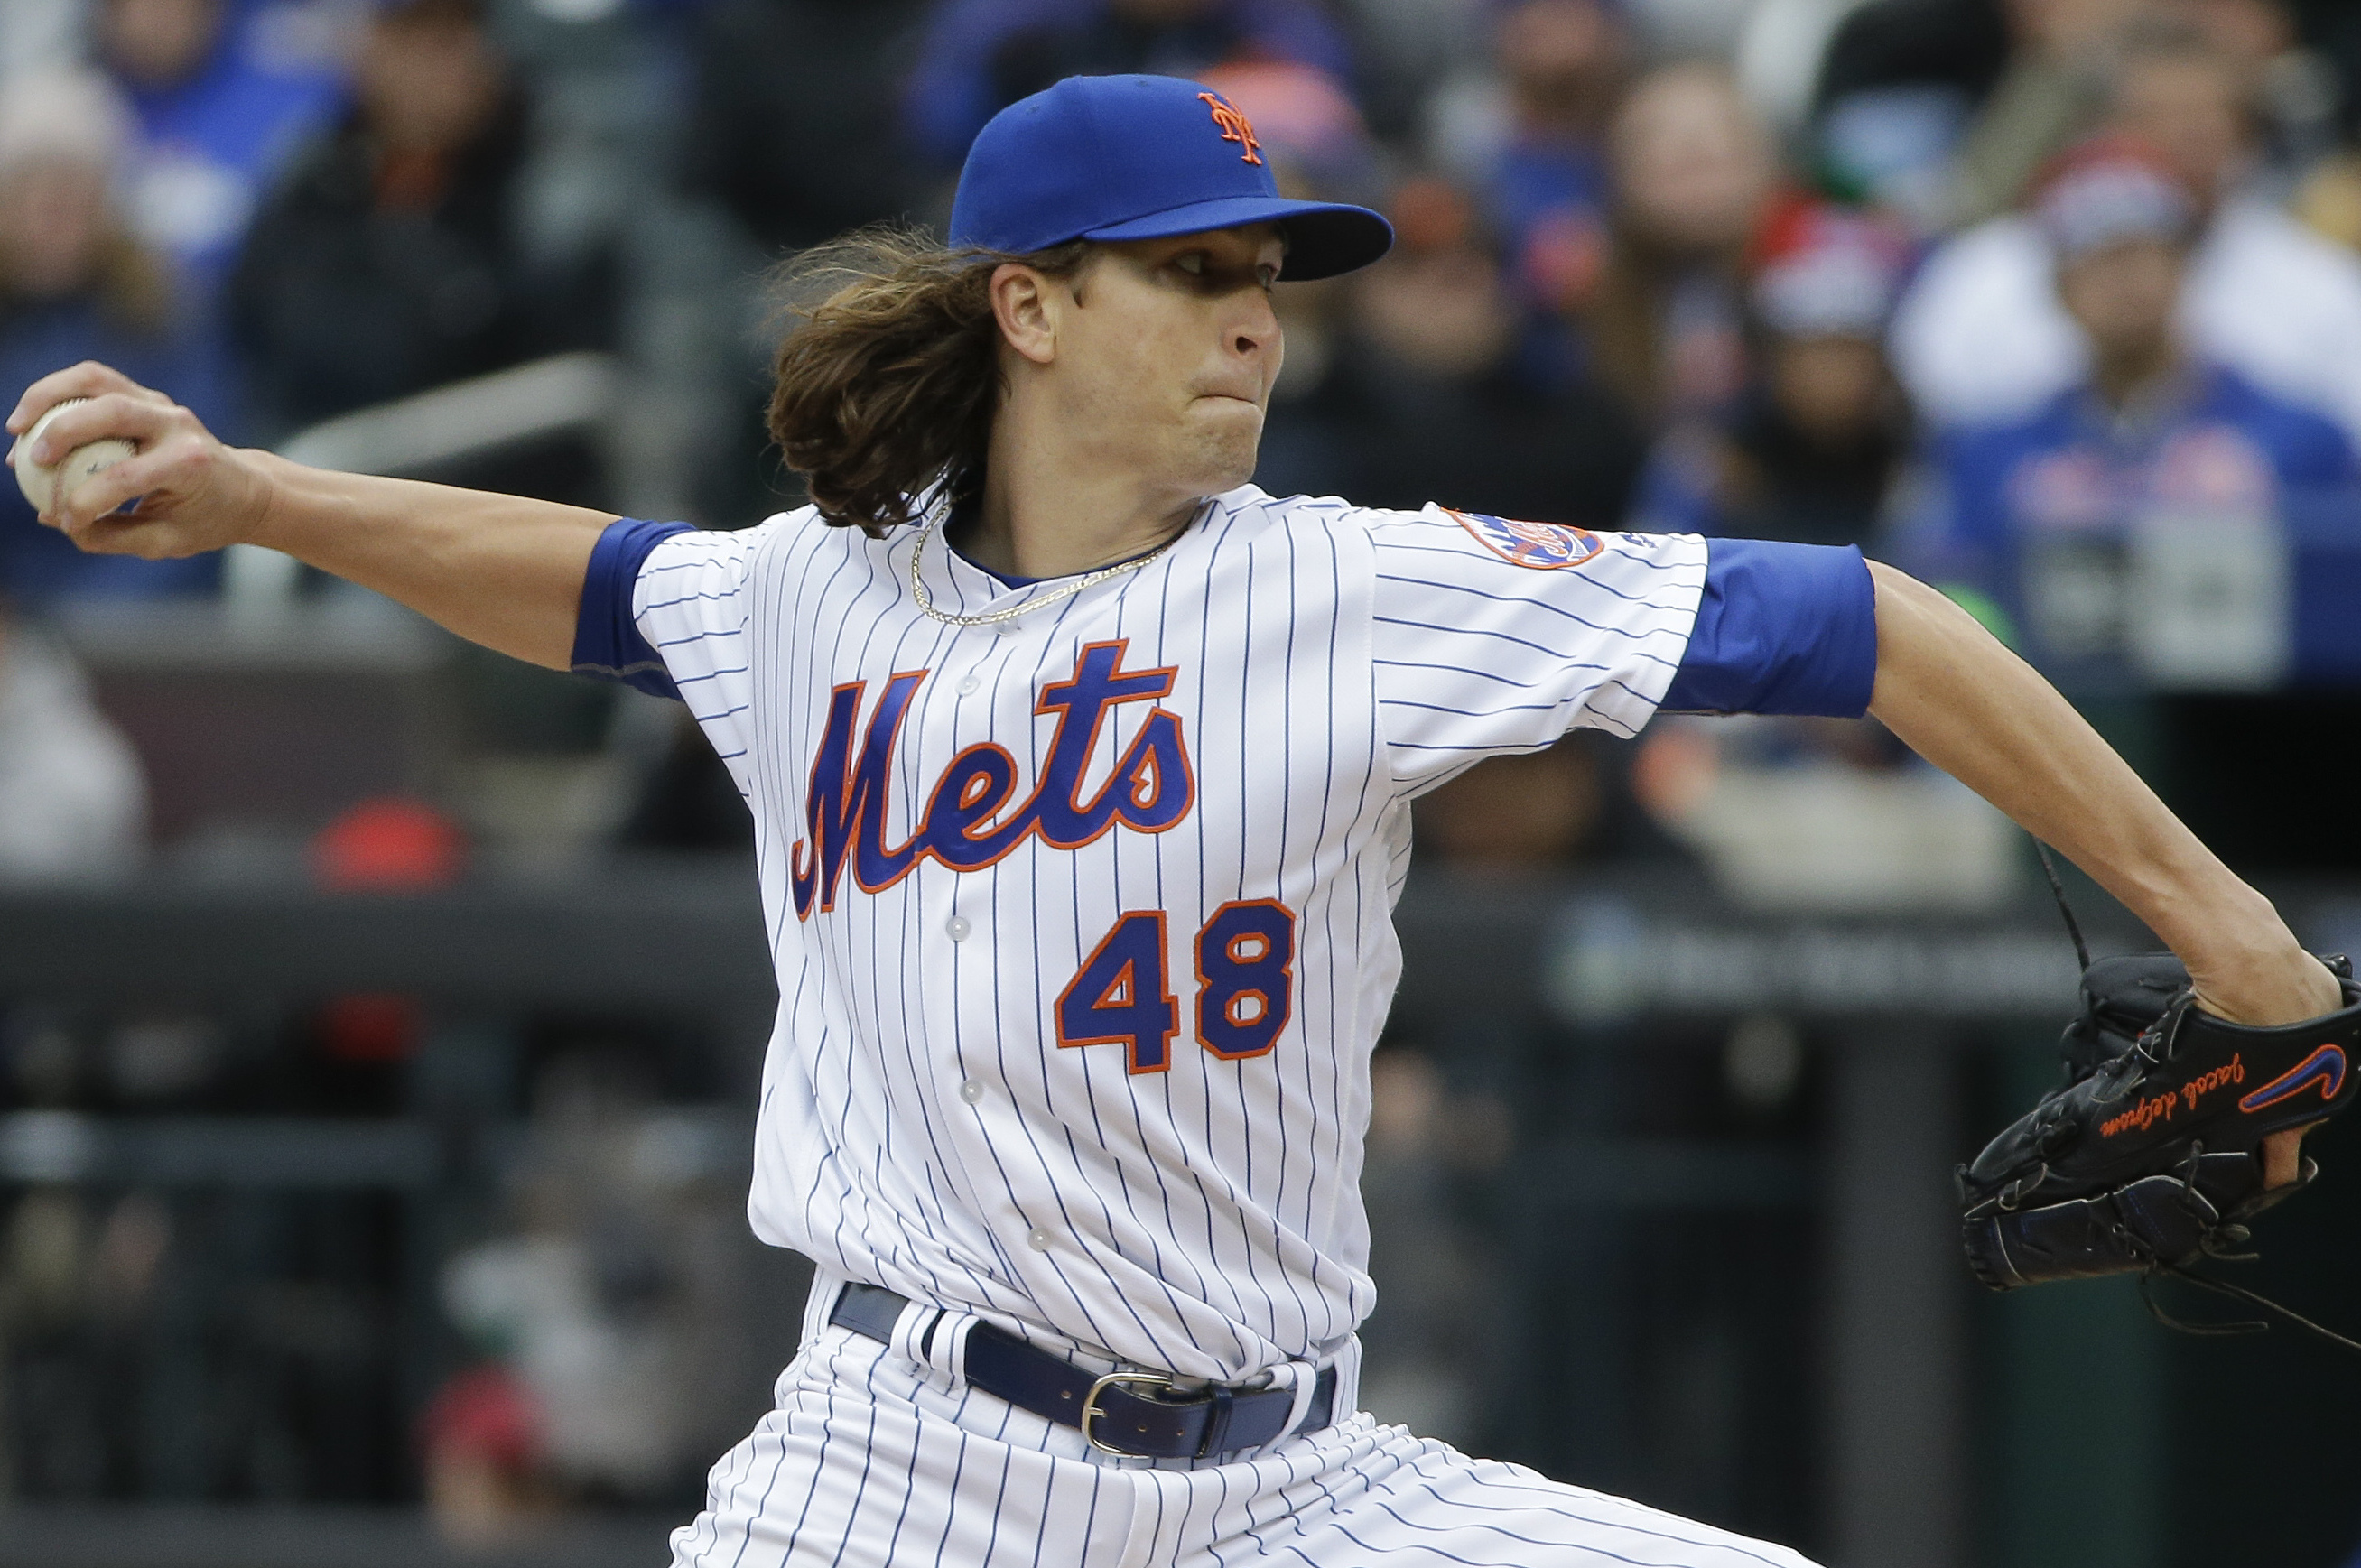 Jacob deGrom's injury leaves Mets rotation thin